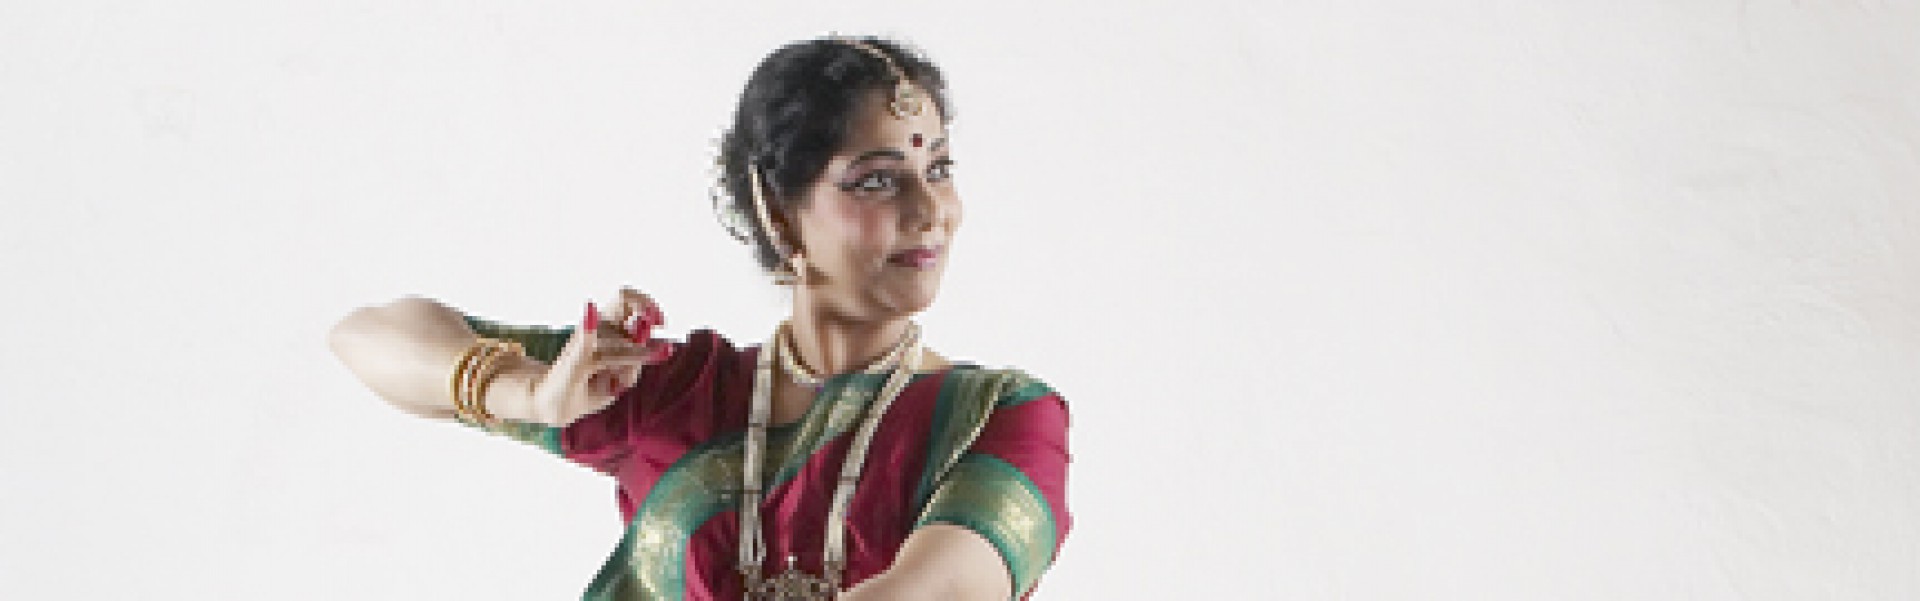 Pushpanjali Dance